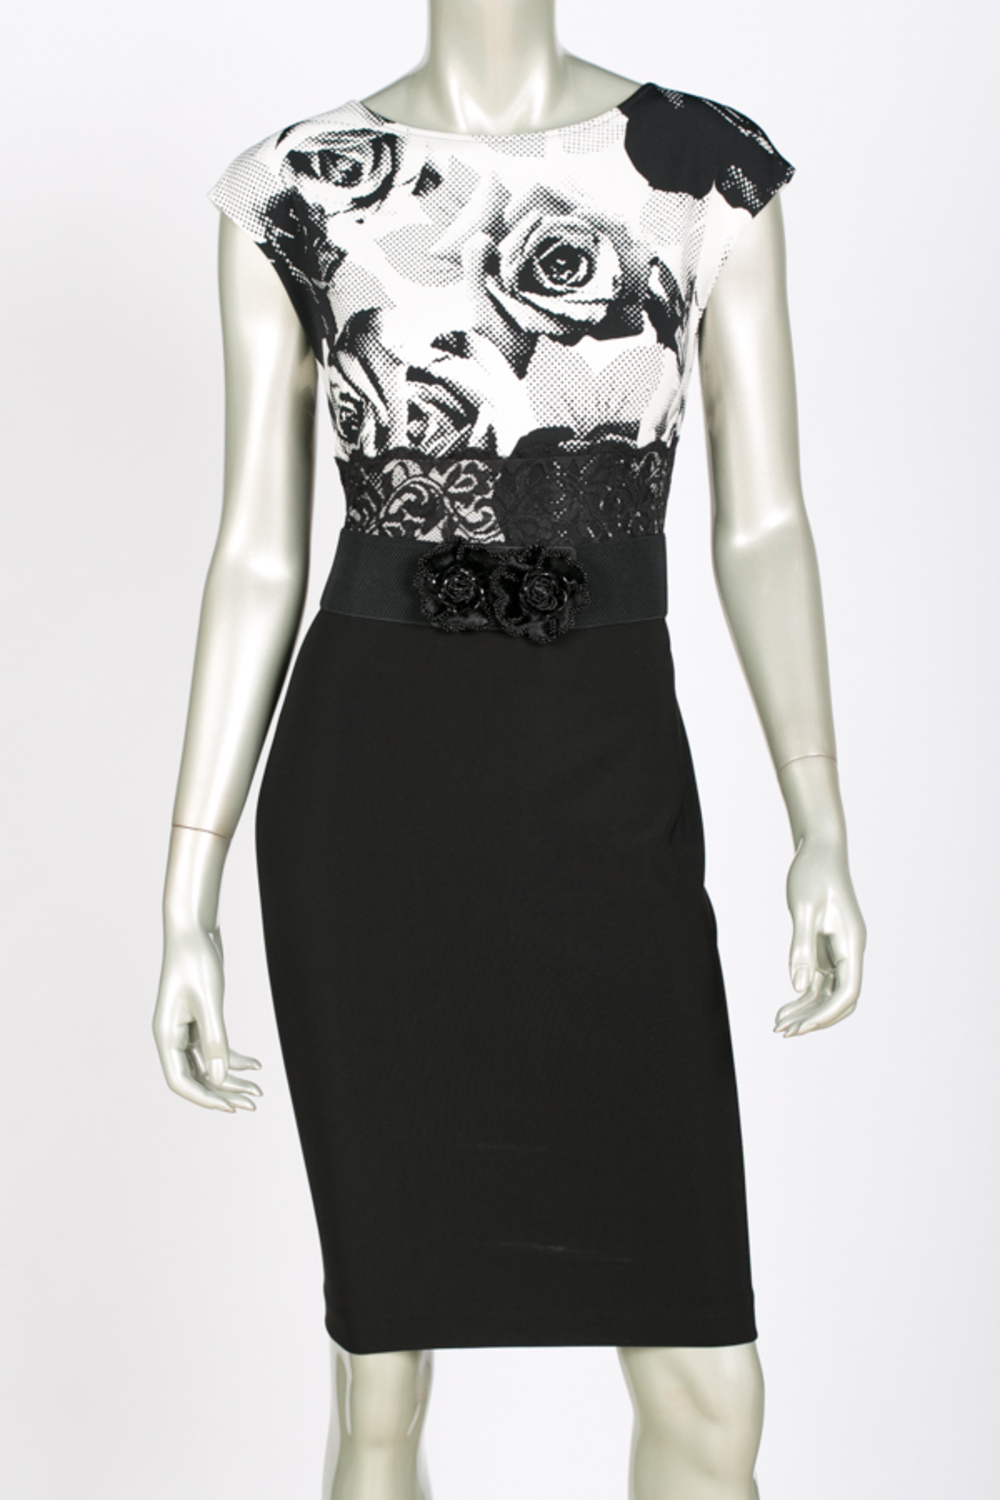 Joseph Ribkoff dress style 144812. Black/ivory